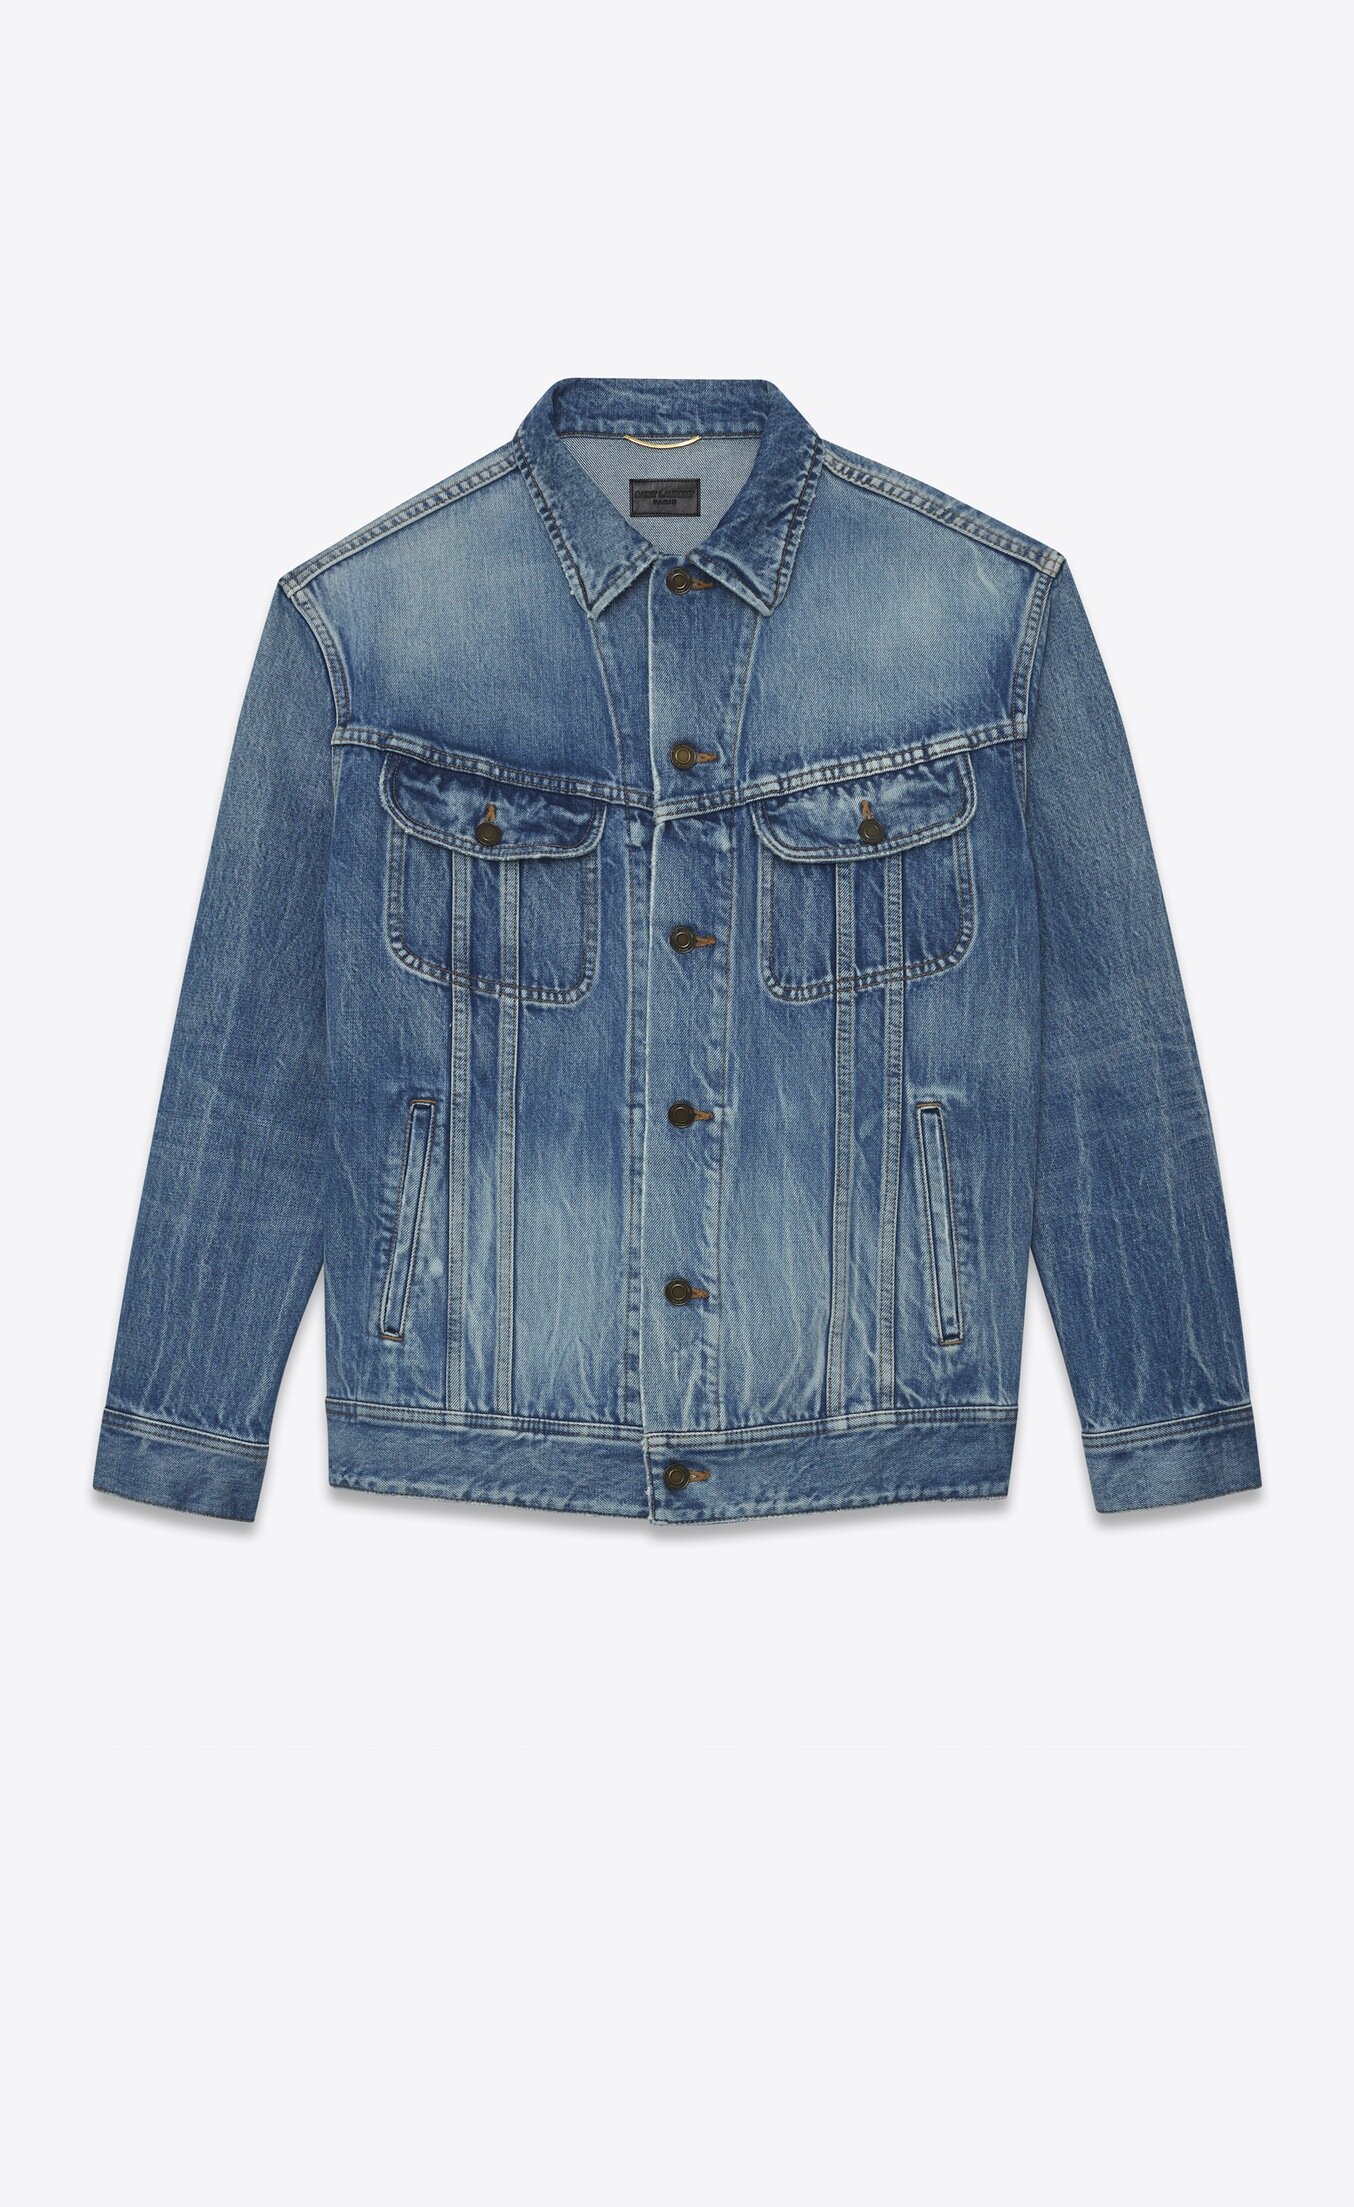 Saint Laurent Oversized Jeans Jacket in Blue Denim — UFO No More